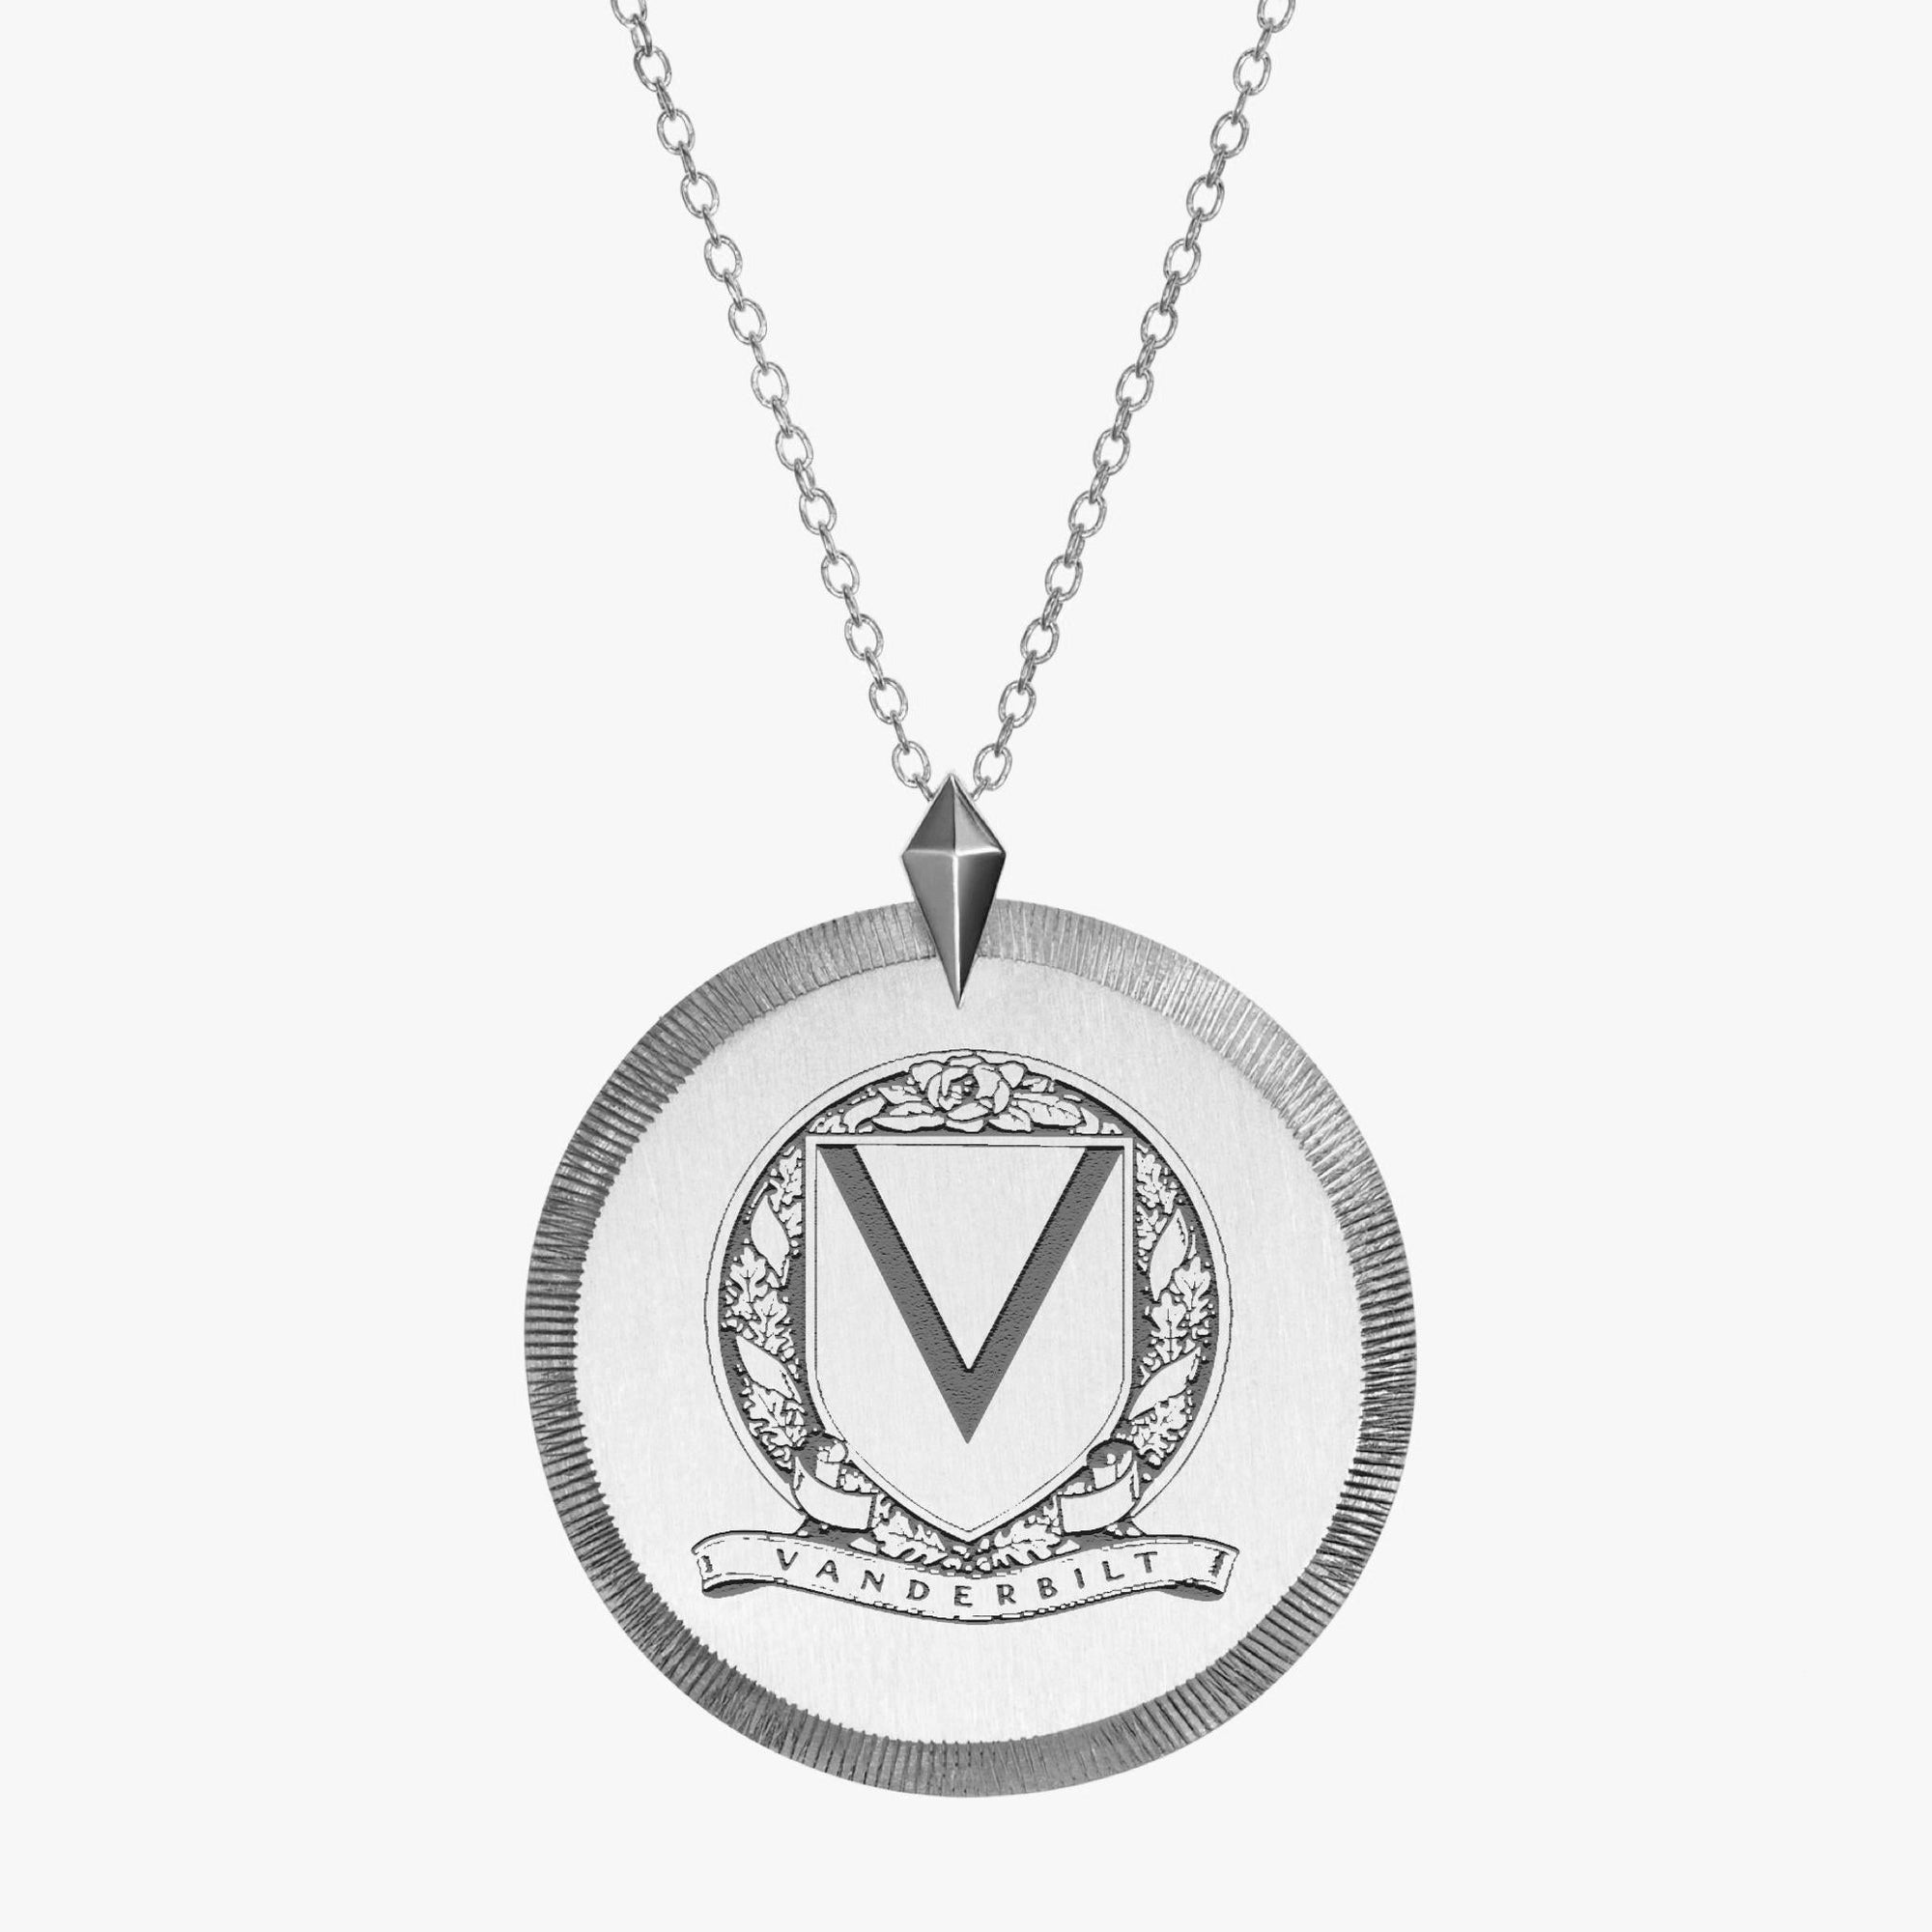 Vanderbilt Vintage Crest Necklace